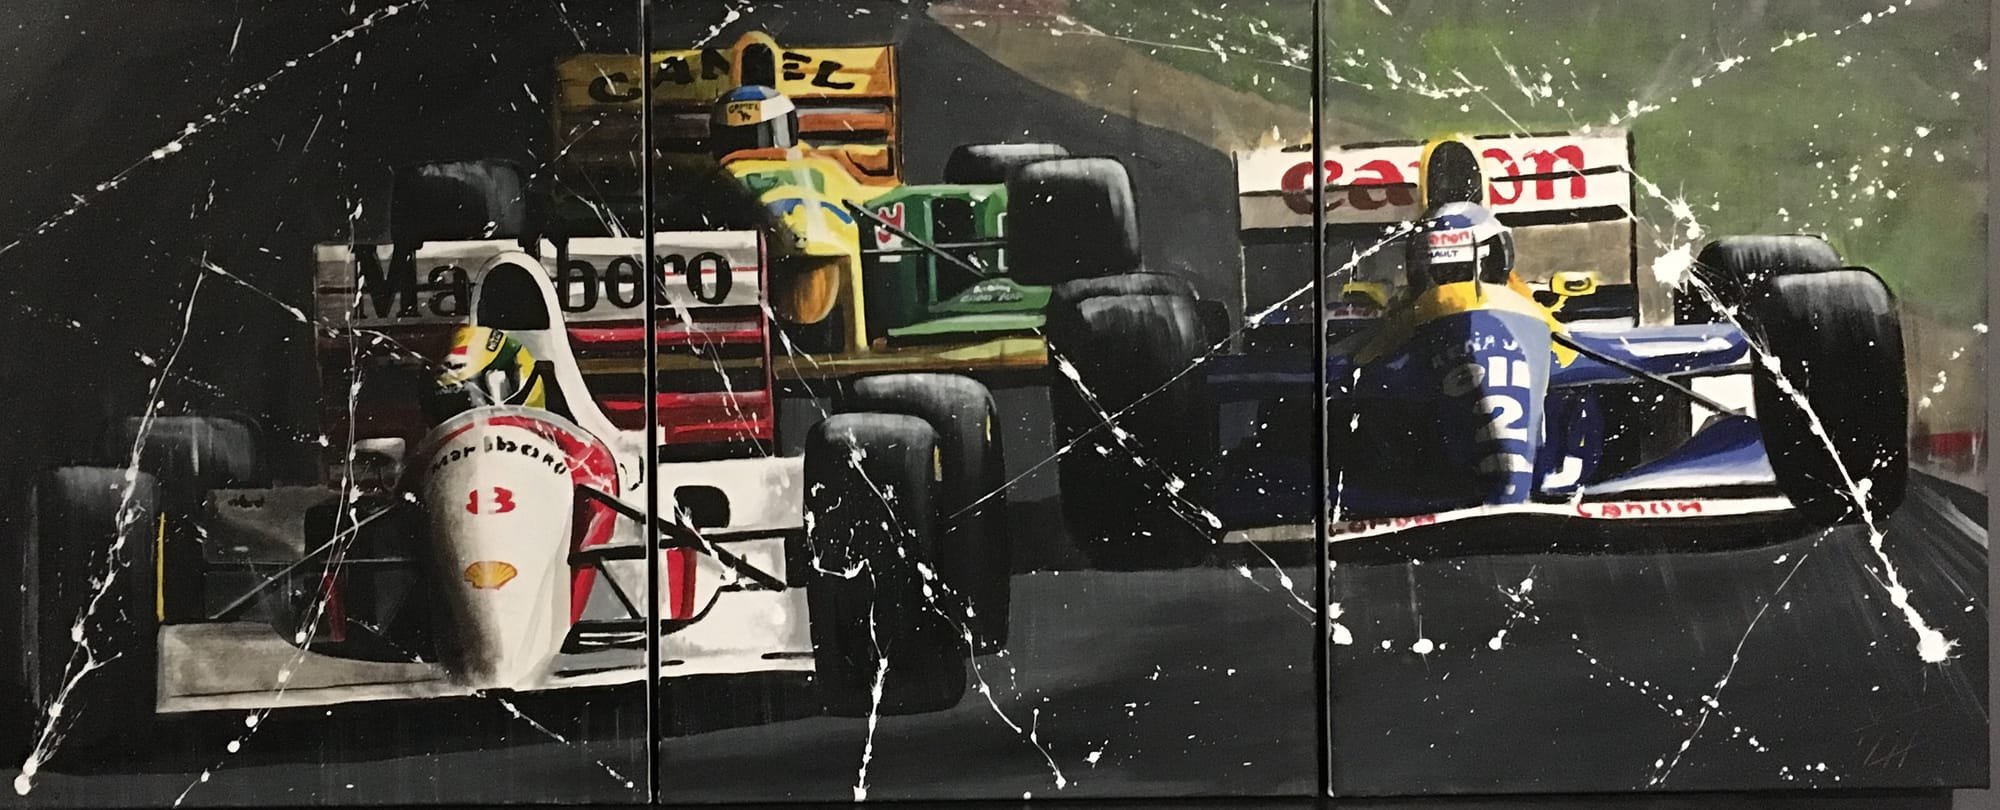 Senna - Prost - Schumacher - The battle of Johannesburg